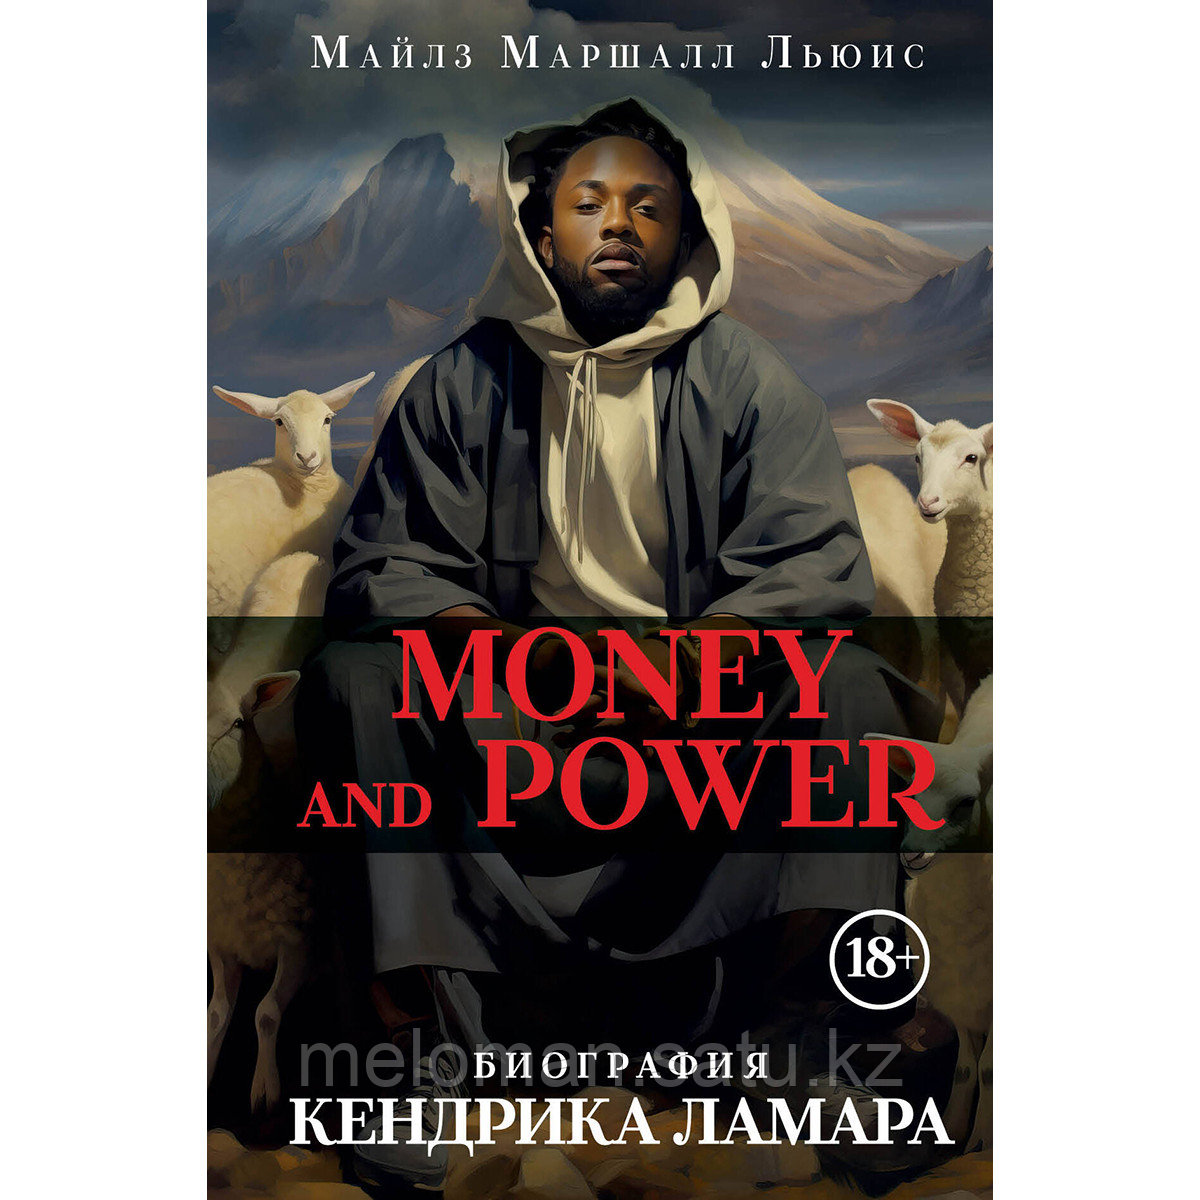 Льюис М. М.: Money and power: биография Кендрика Ламара